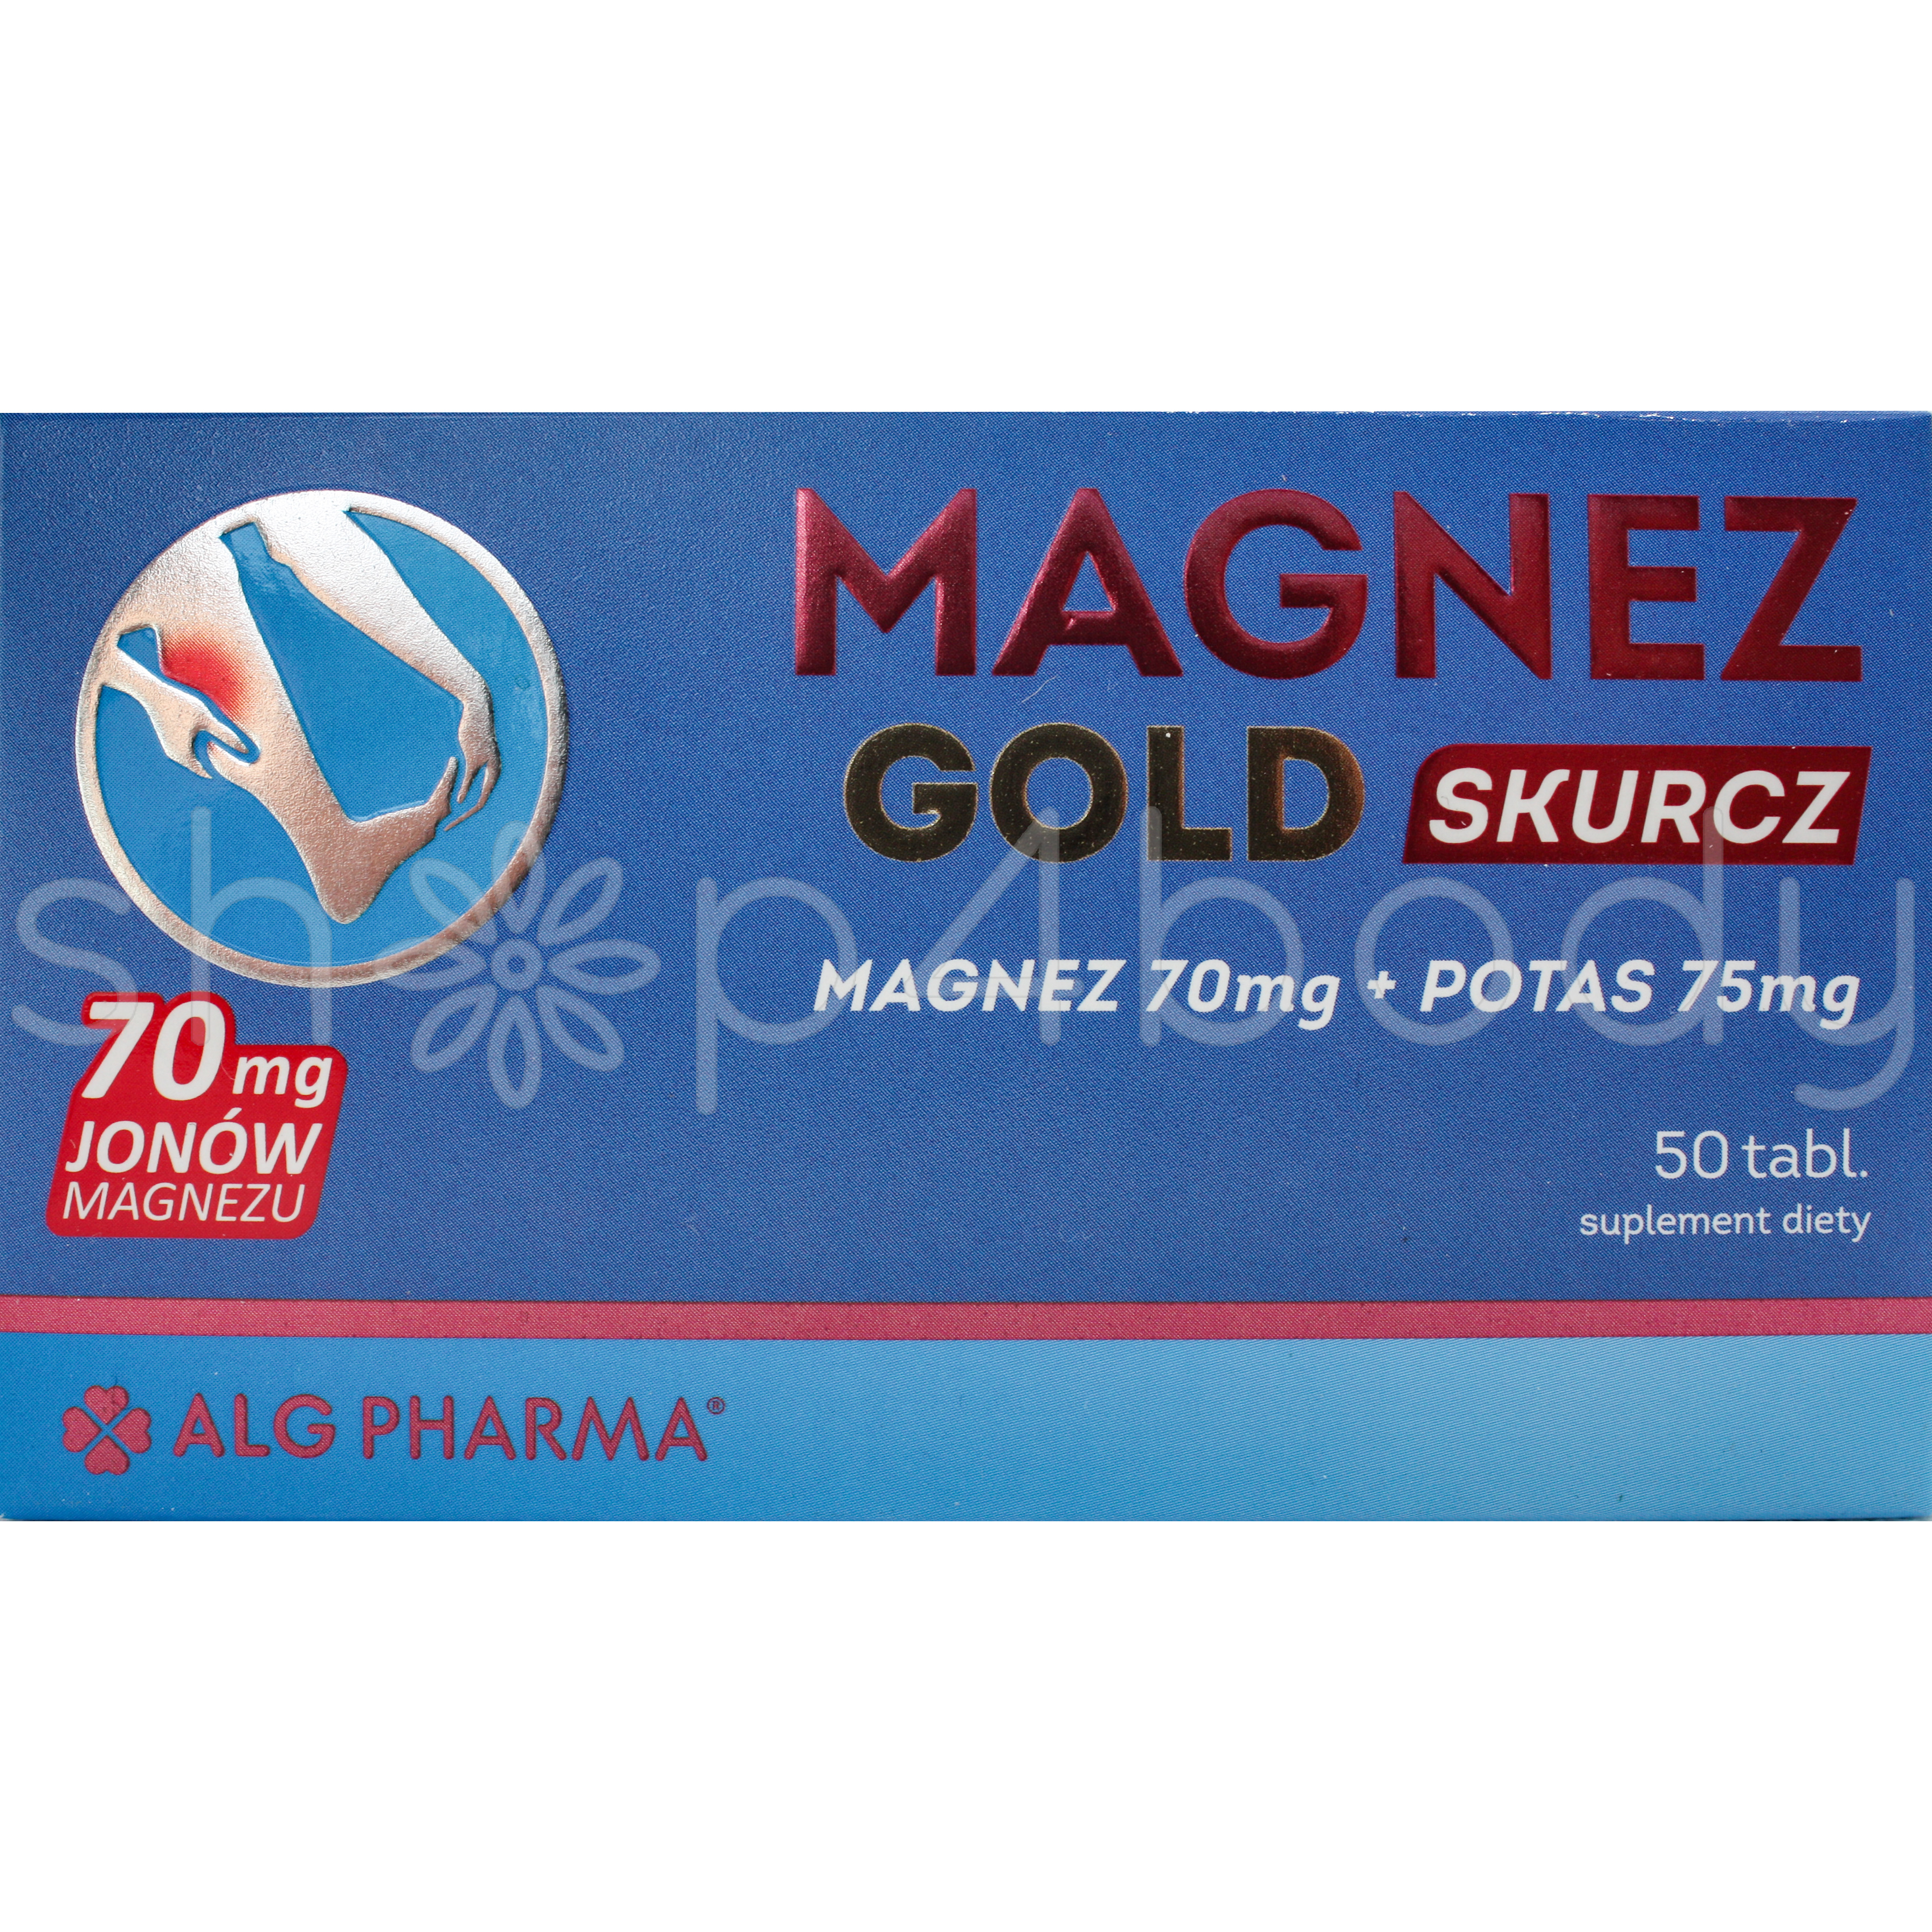 magnez-gold-skurcz-50-tabletter-.jpg